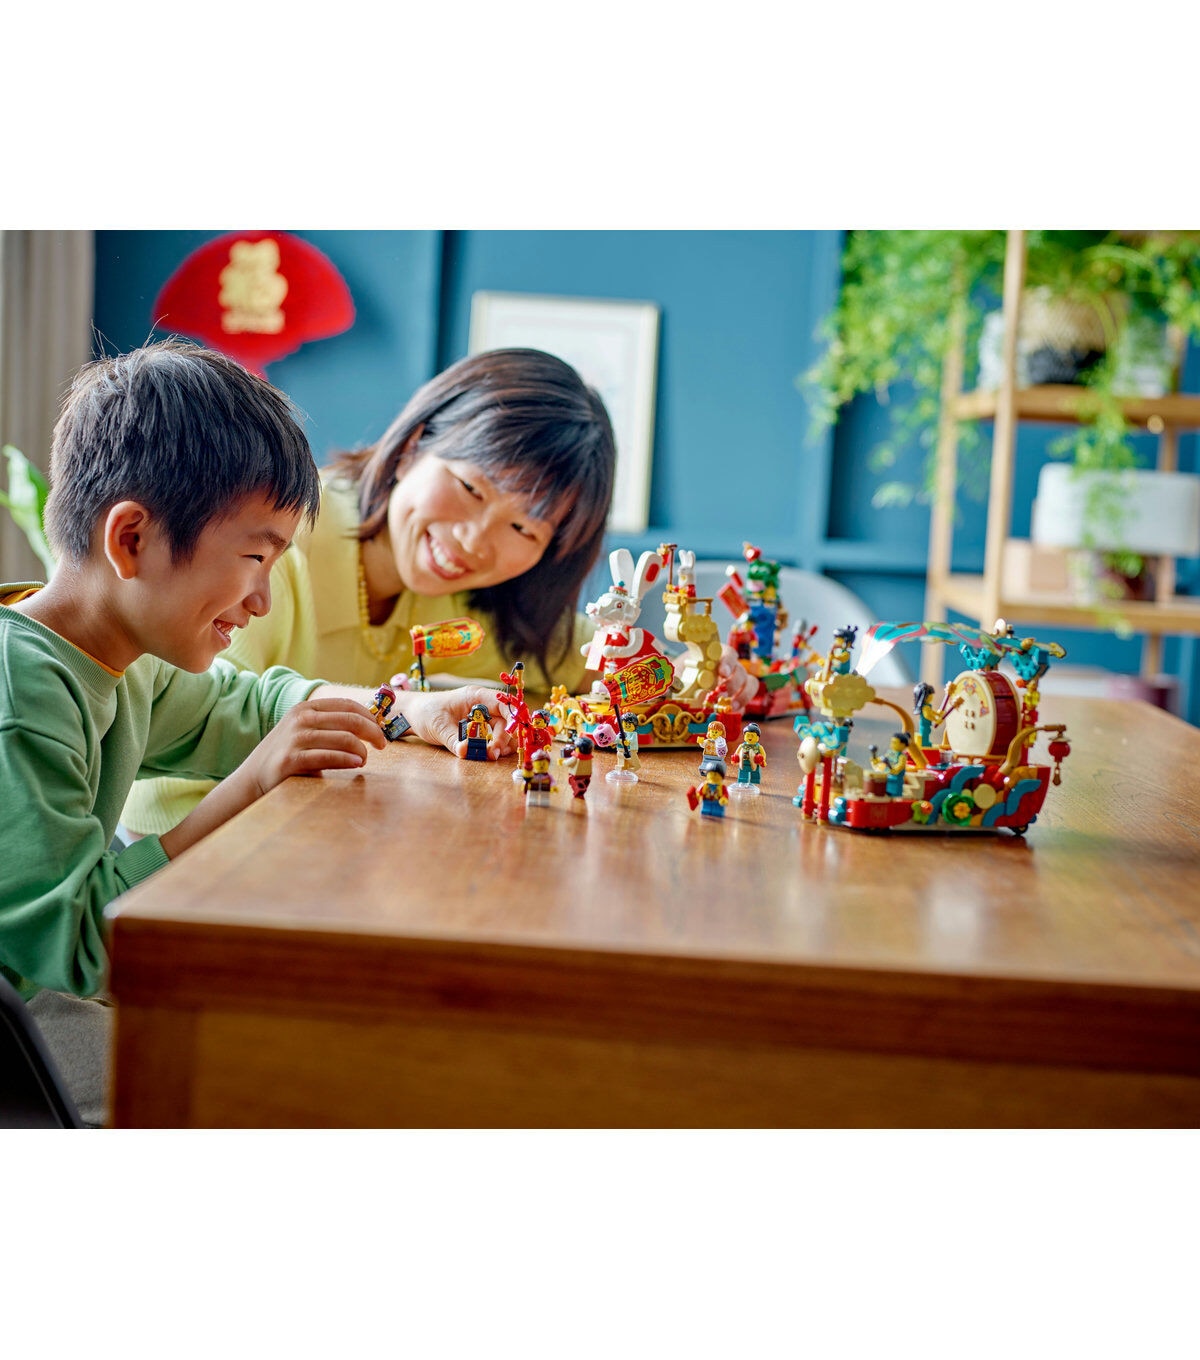 LEGO 1653pc Lunar New Year Parade 80111 Building Toy Set | JOANN